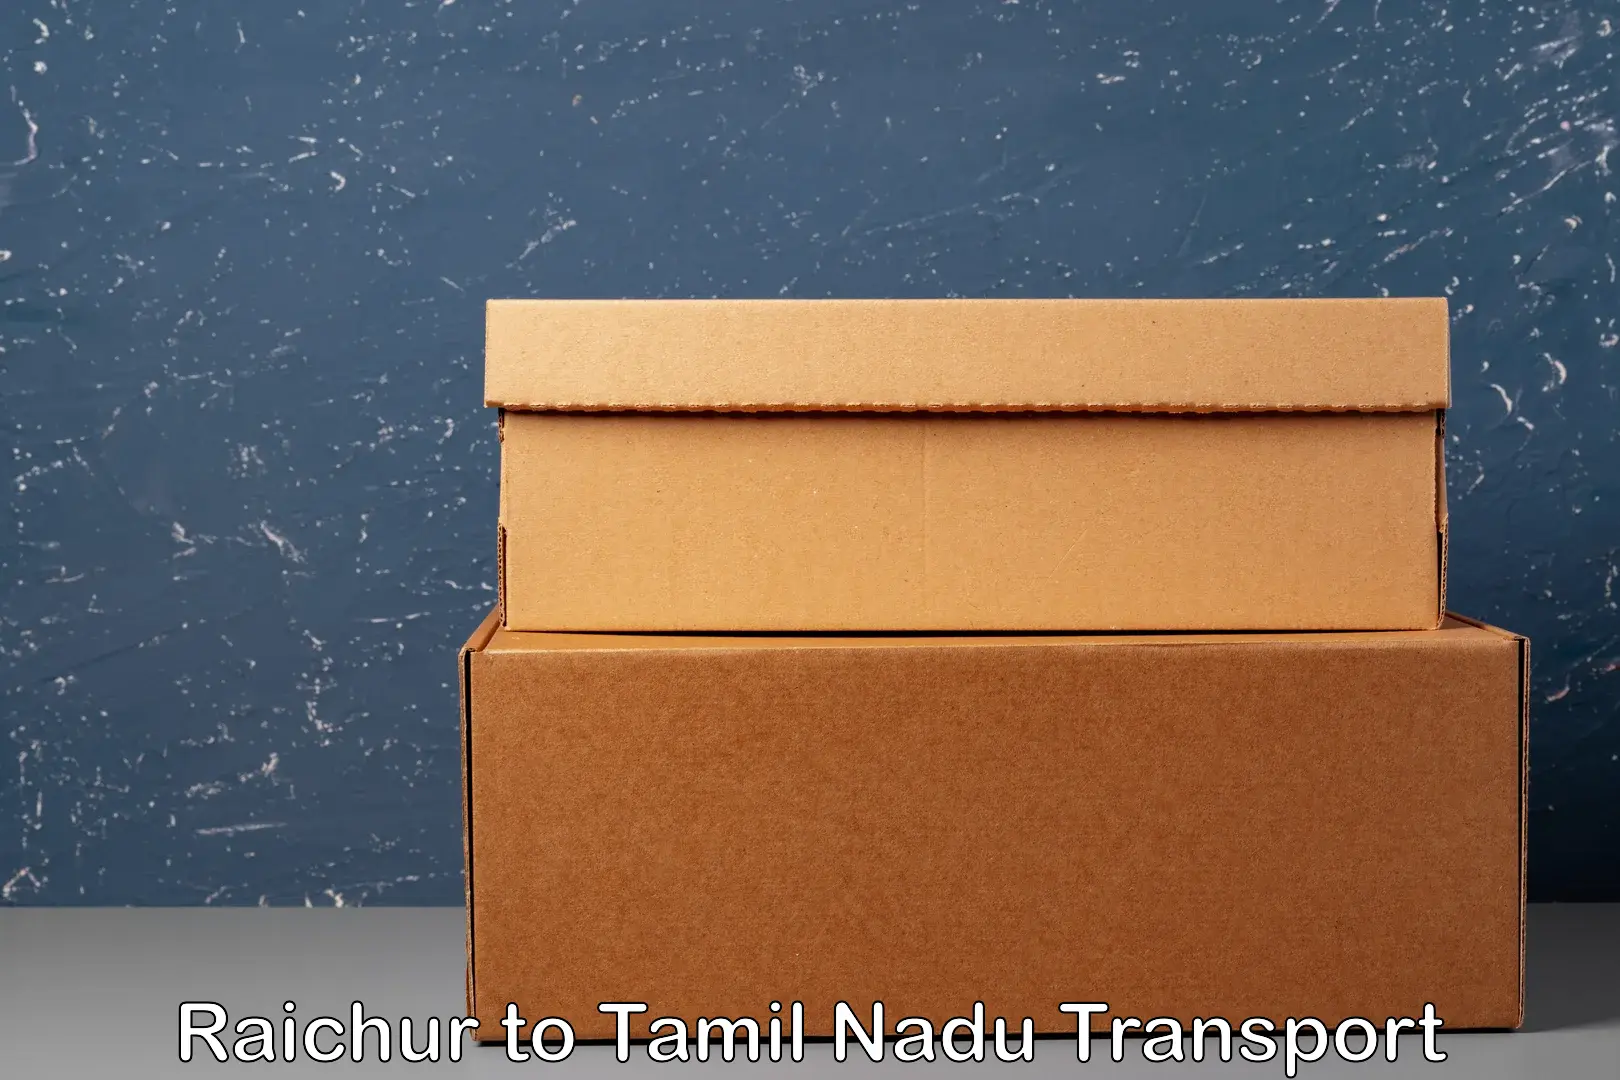 Express transport services Raichur to Tirukalukundram